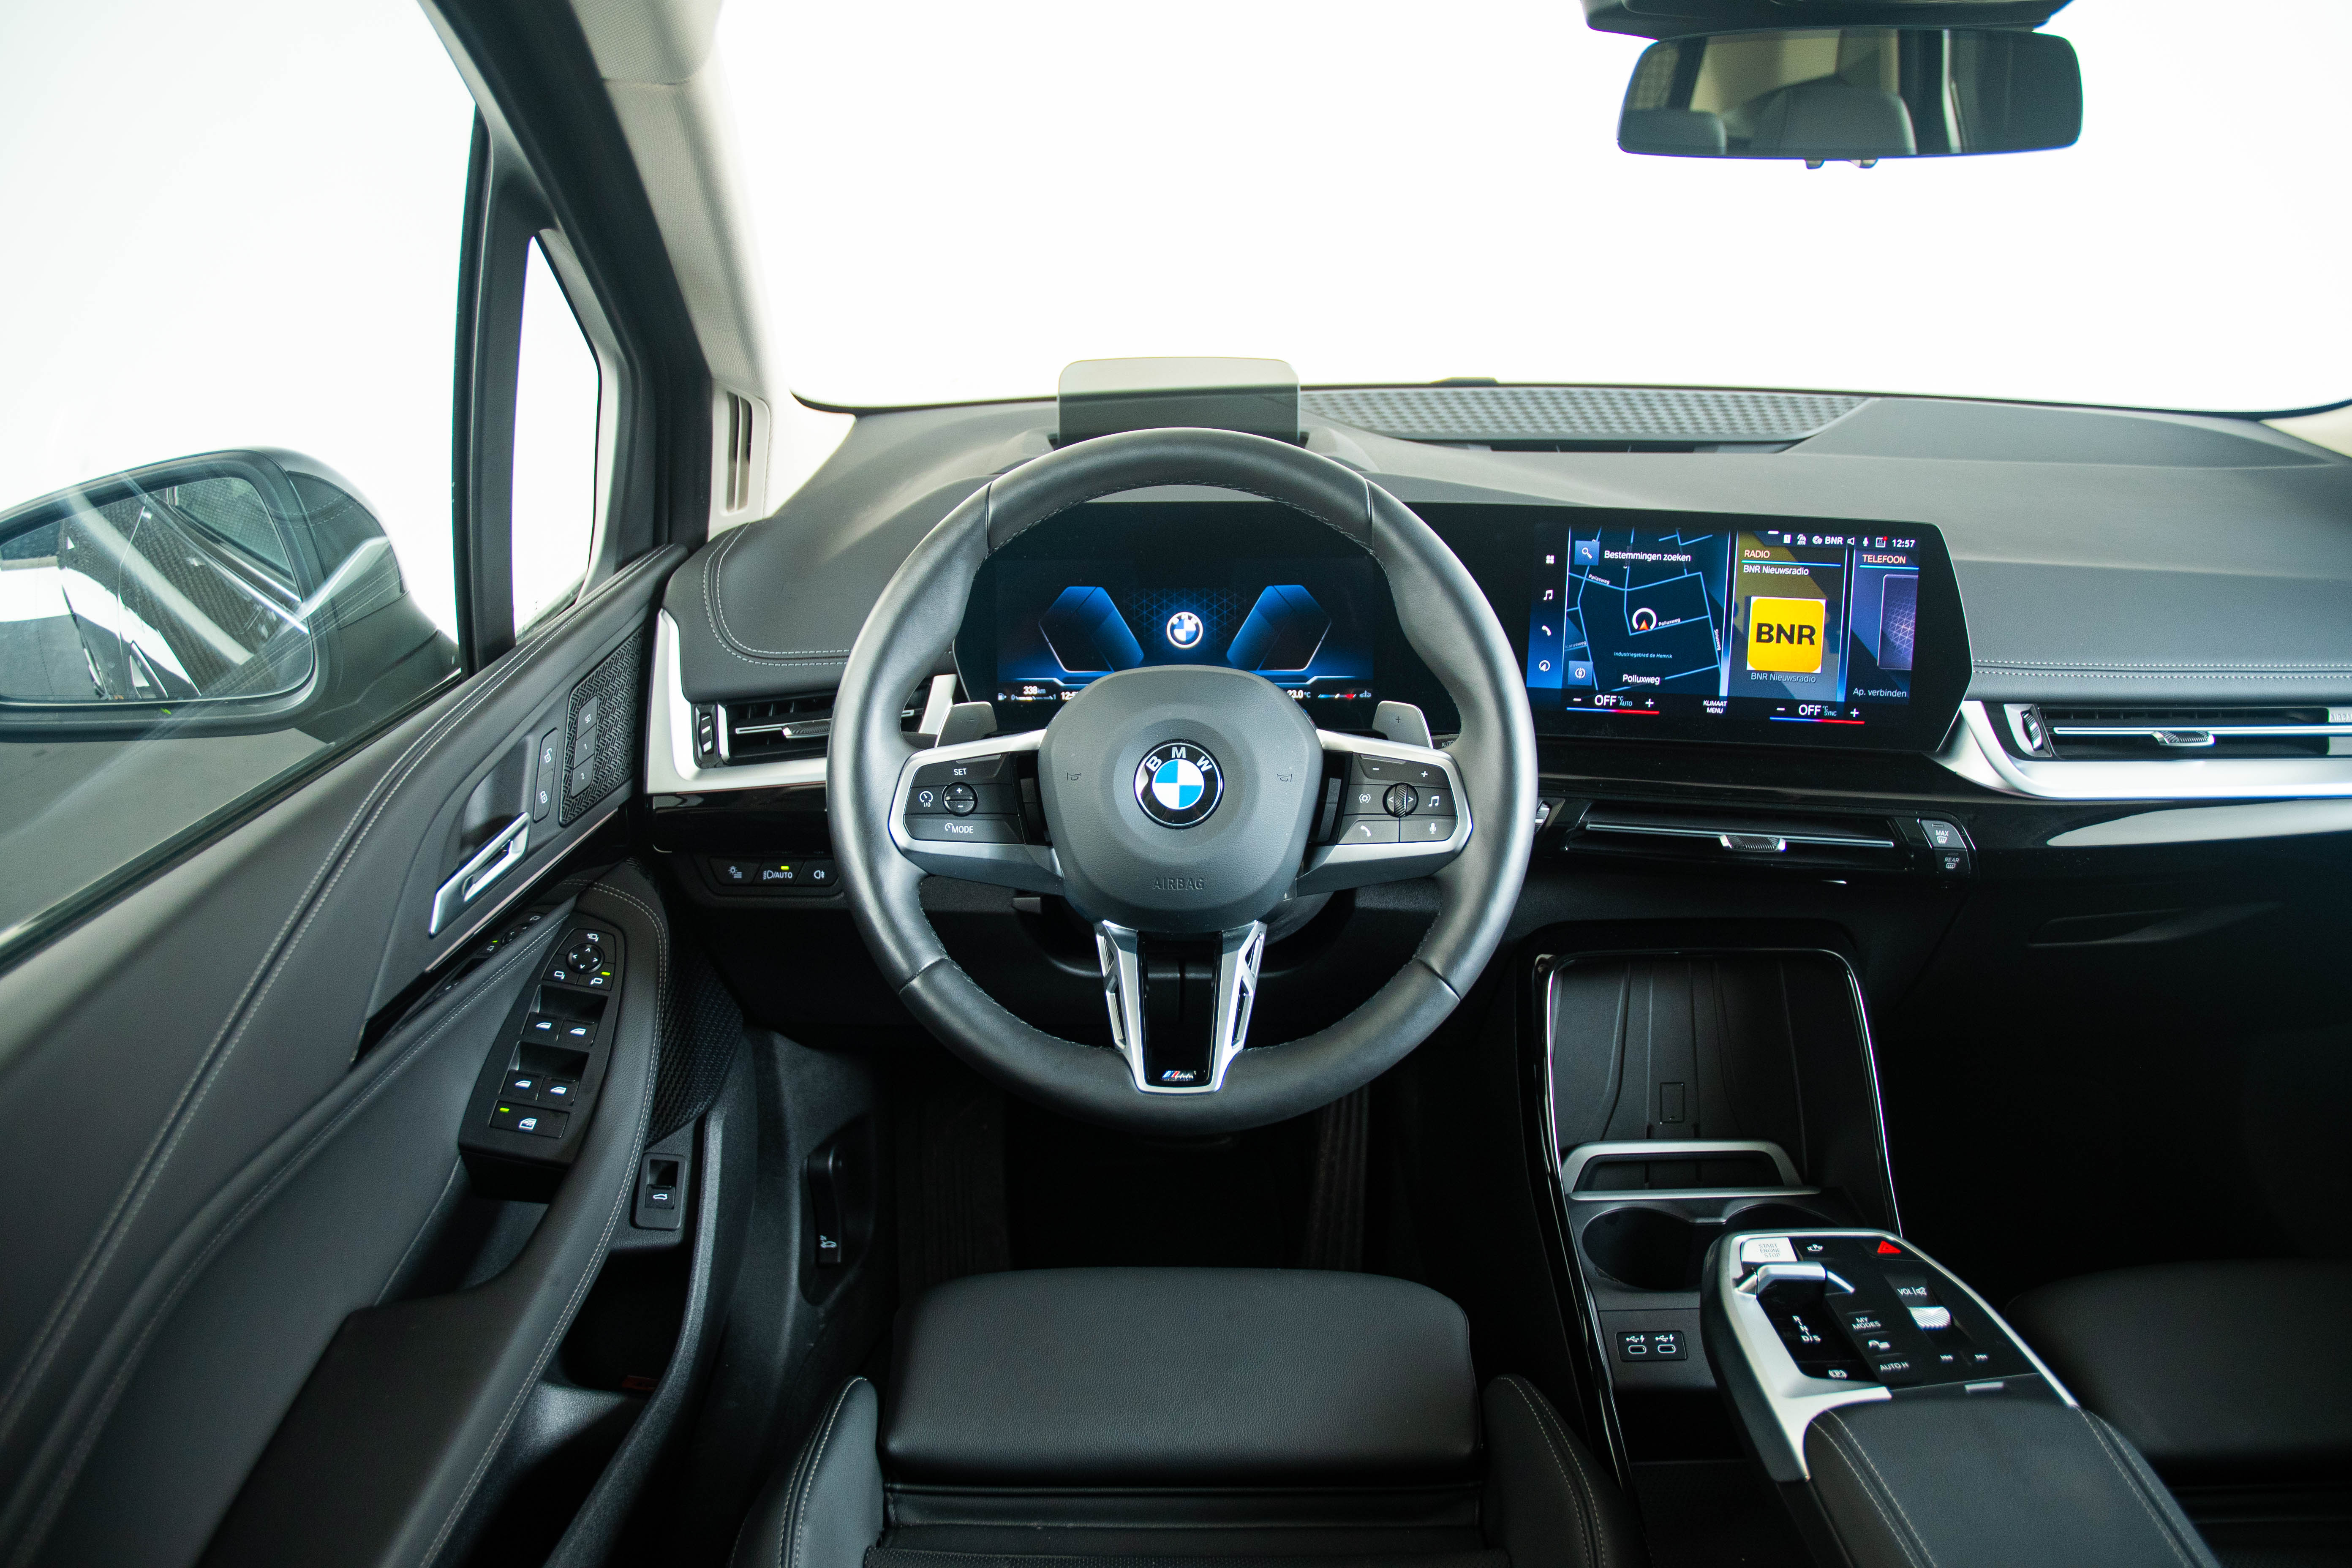 BMW Head-Up Display